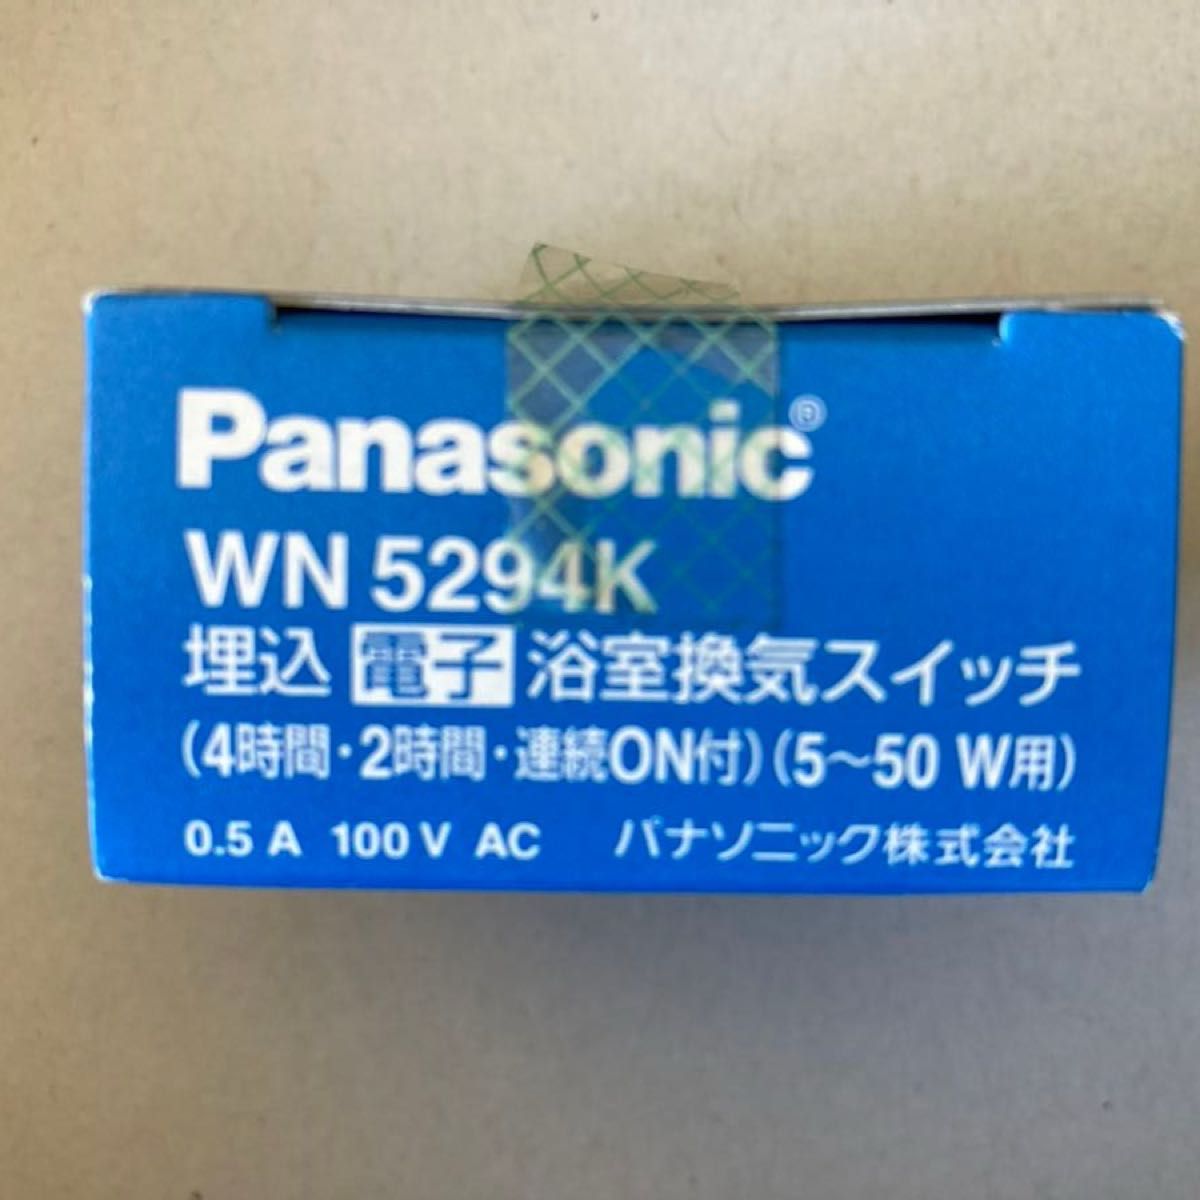 Panasonic WN 5294K 埋込電子浴室換気扇スイッチ